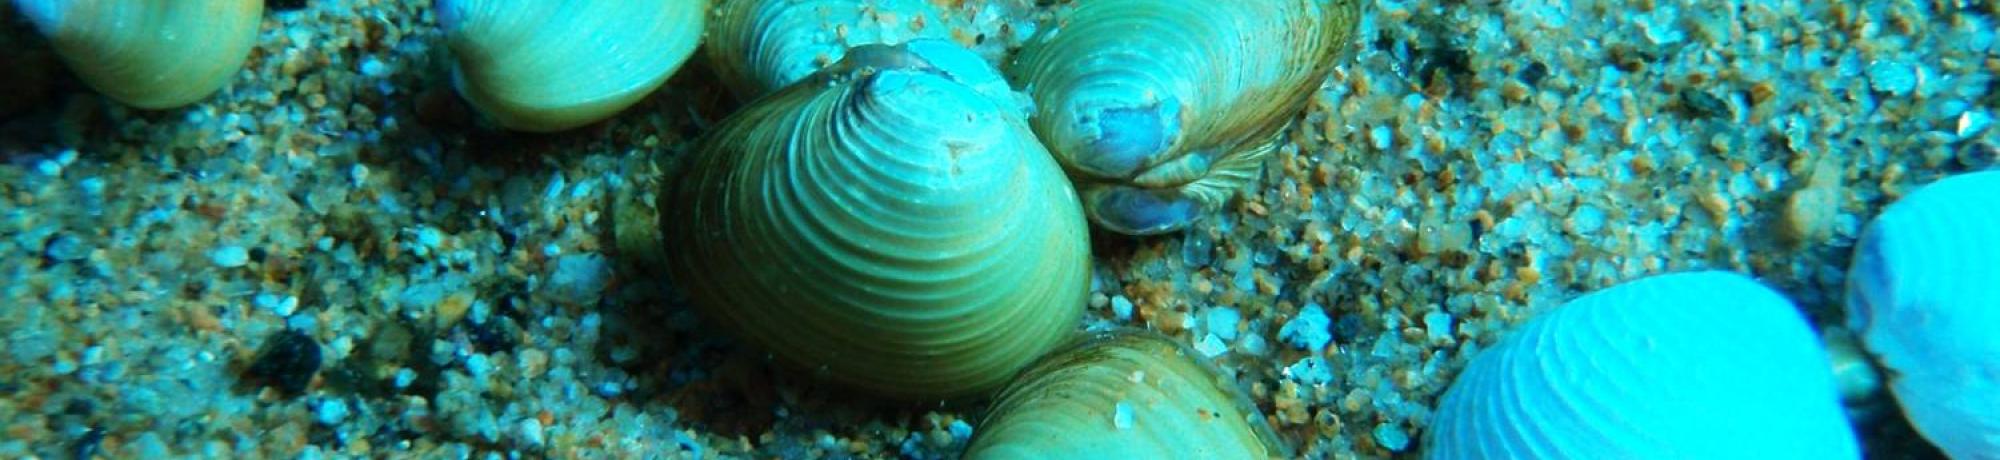 Asian clams underwater